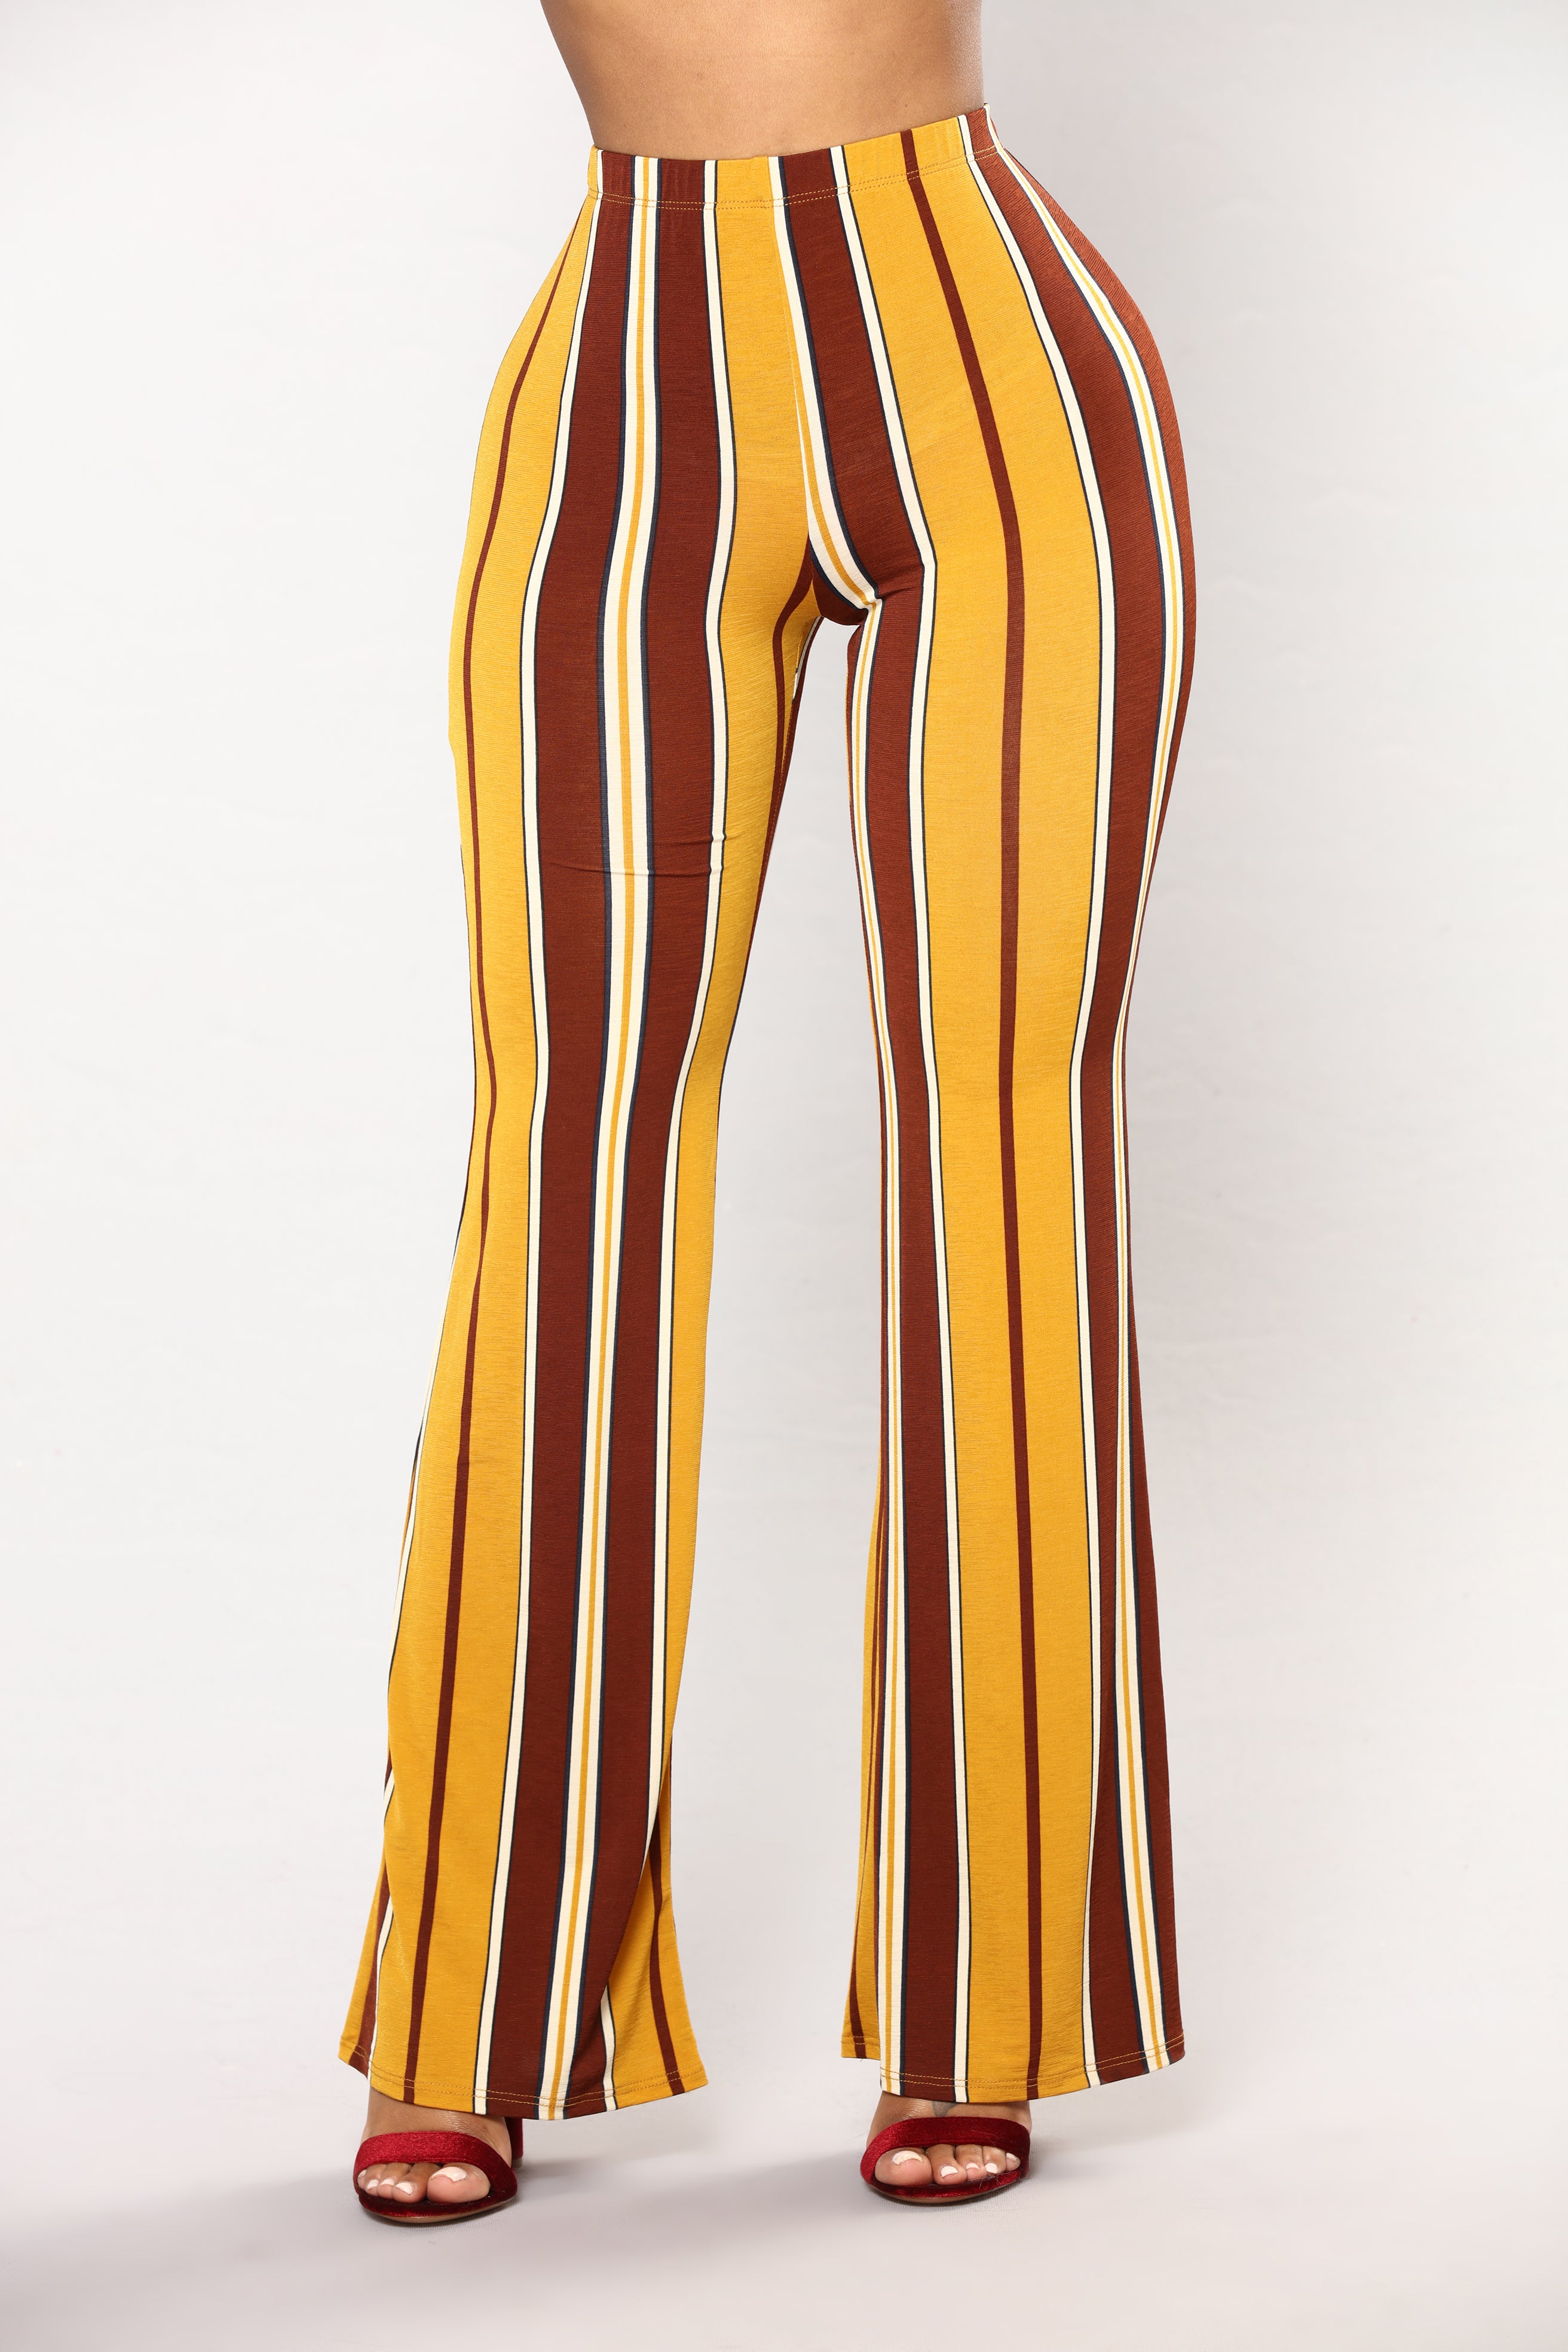 mustard striped pants